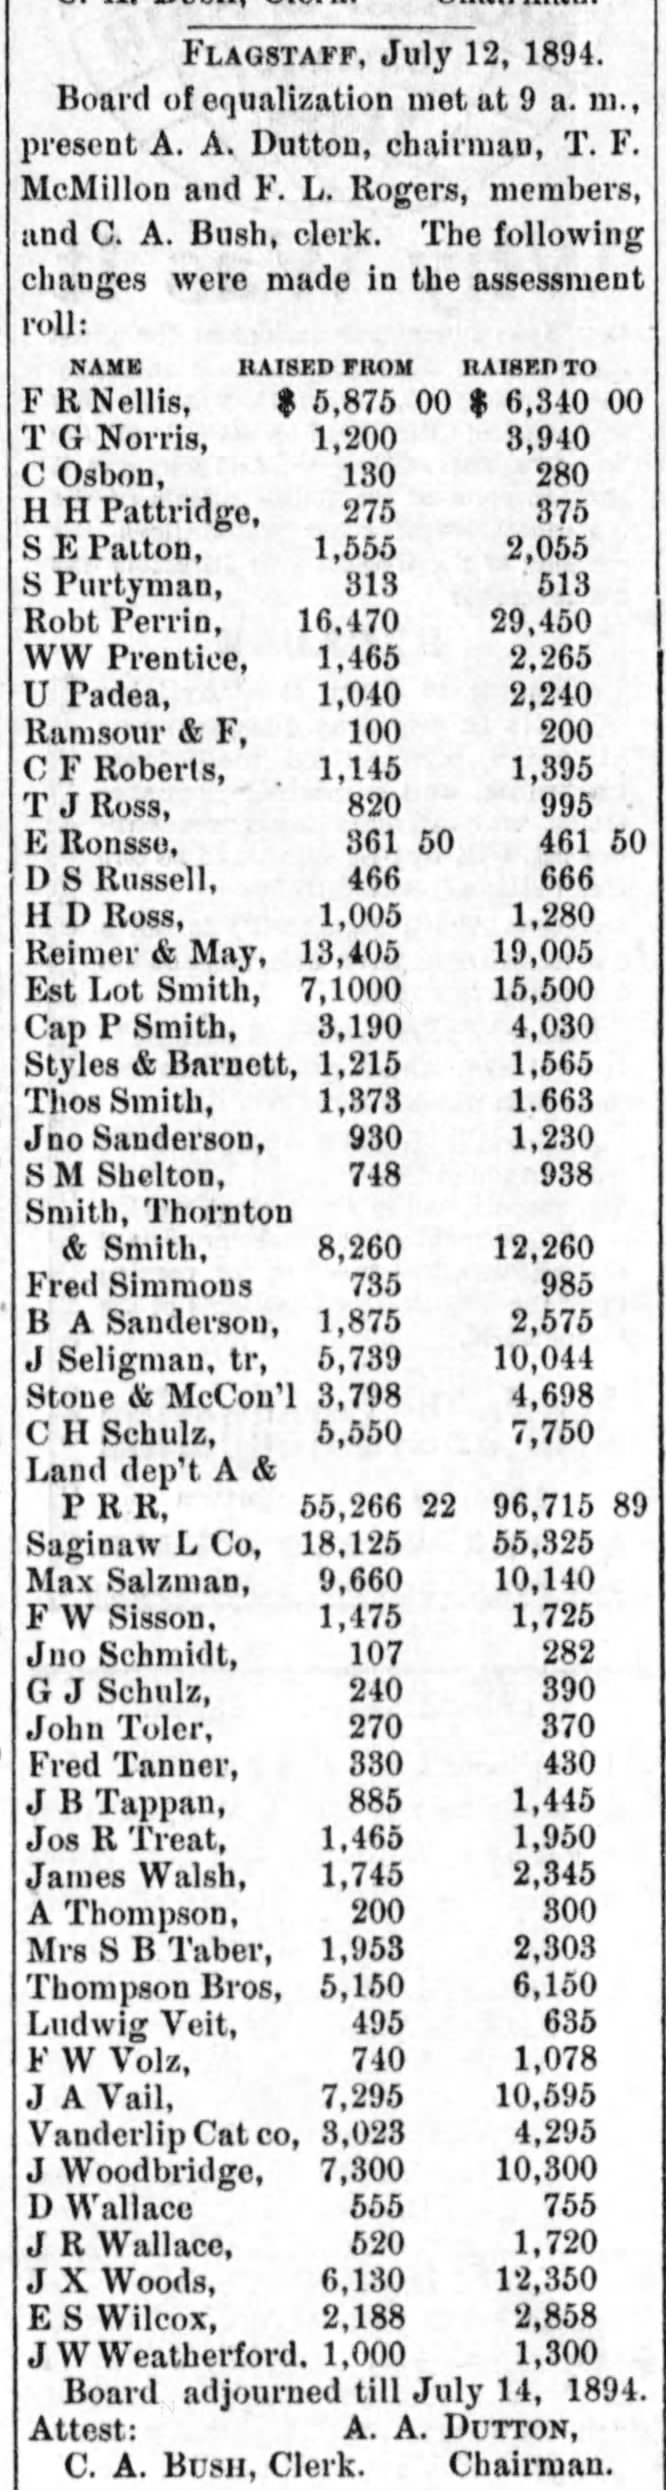 Board of Equalization - Taxes - Cal Osbon, 19 Jul 1894 - Coconino Sun, Flagstaff AZ